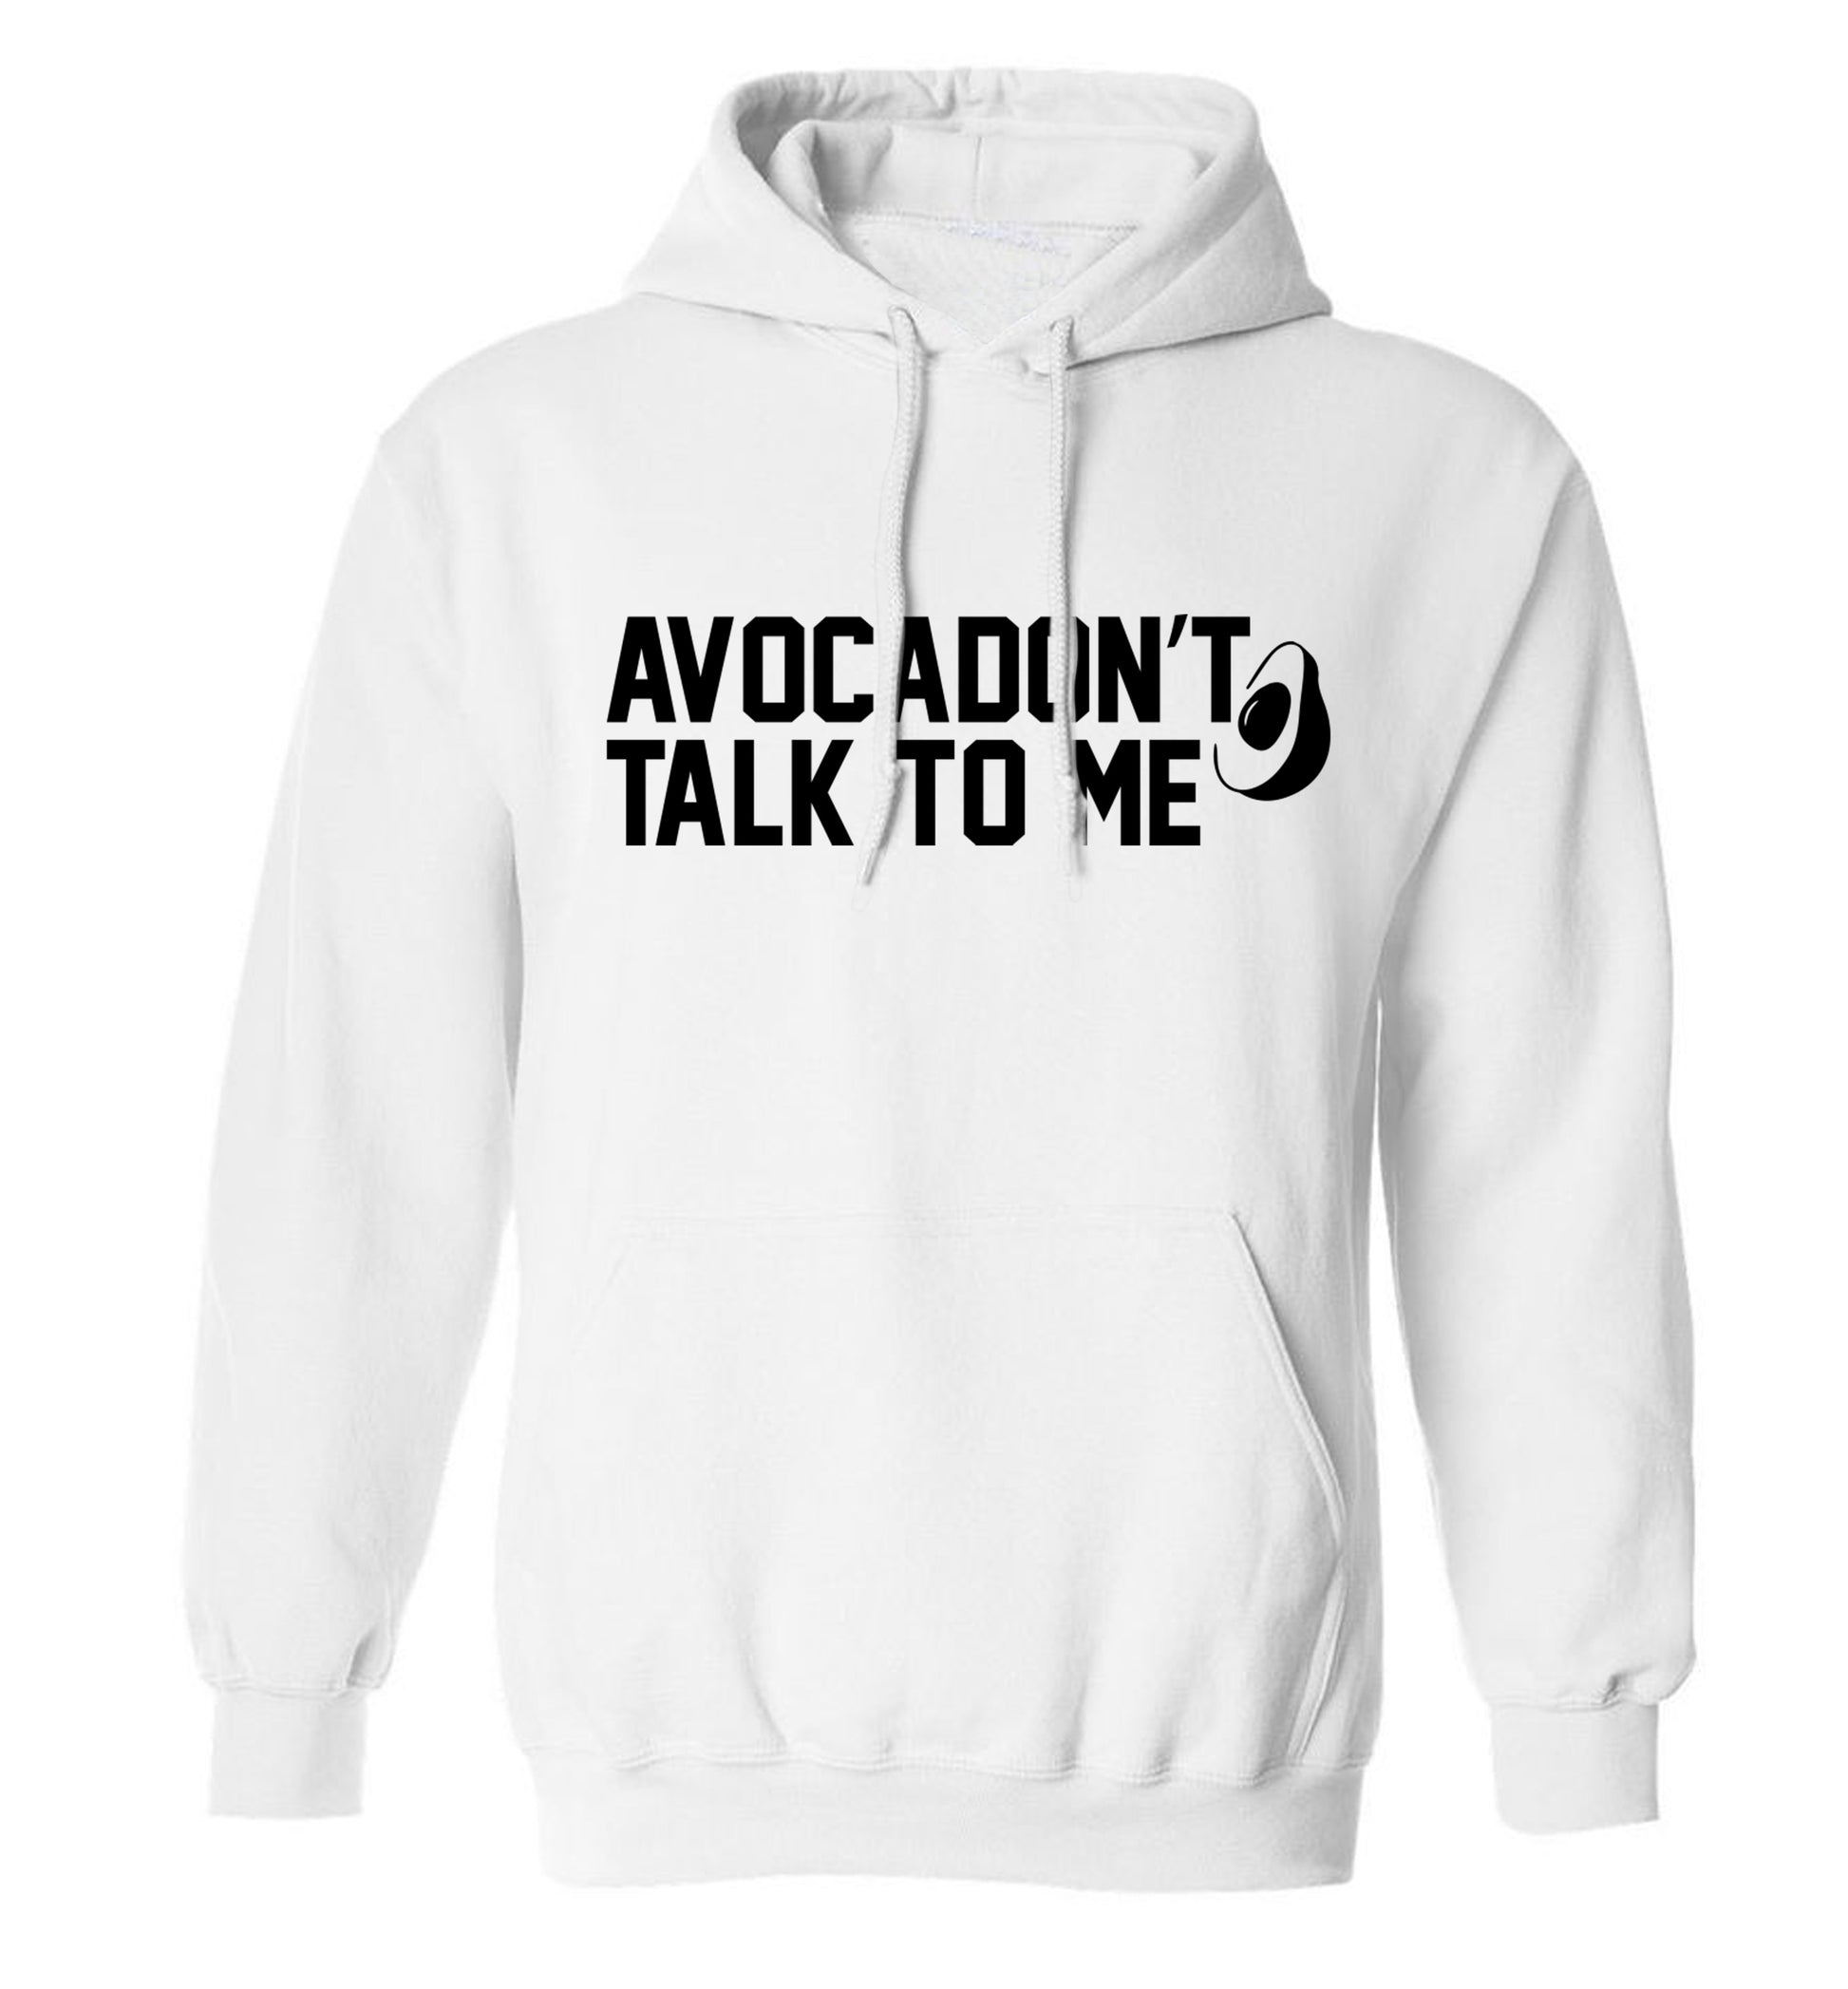 Avocadon't talk to me adults unisex white hoodie 2XL